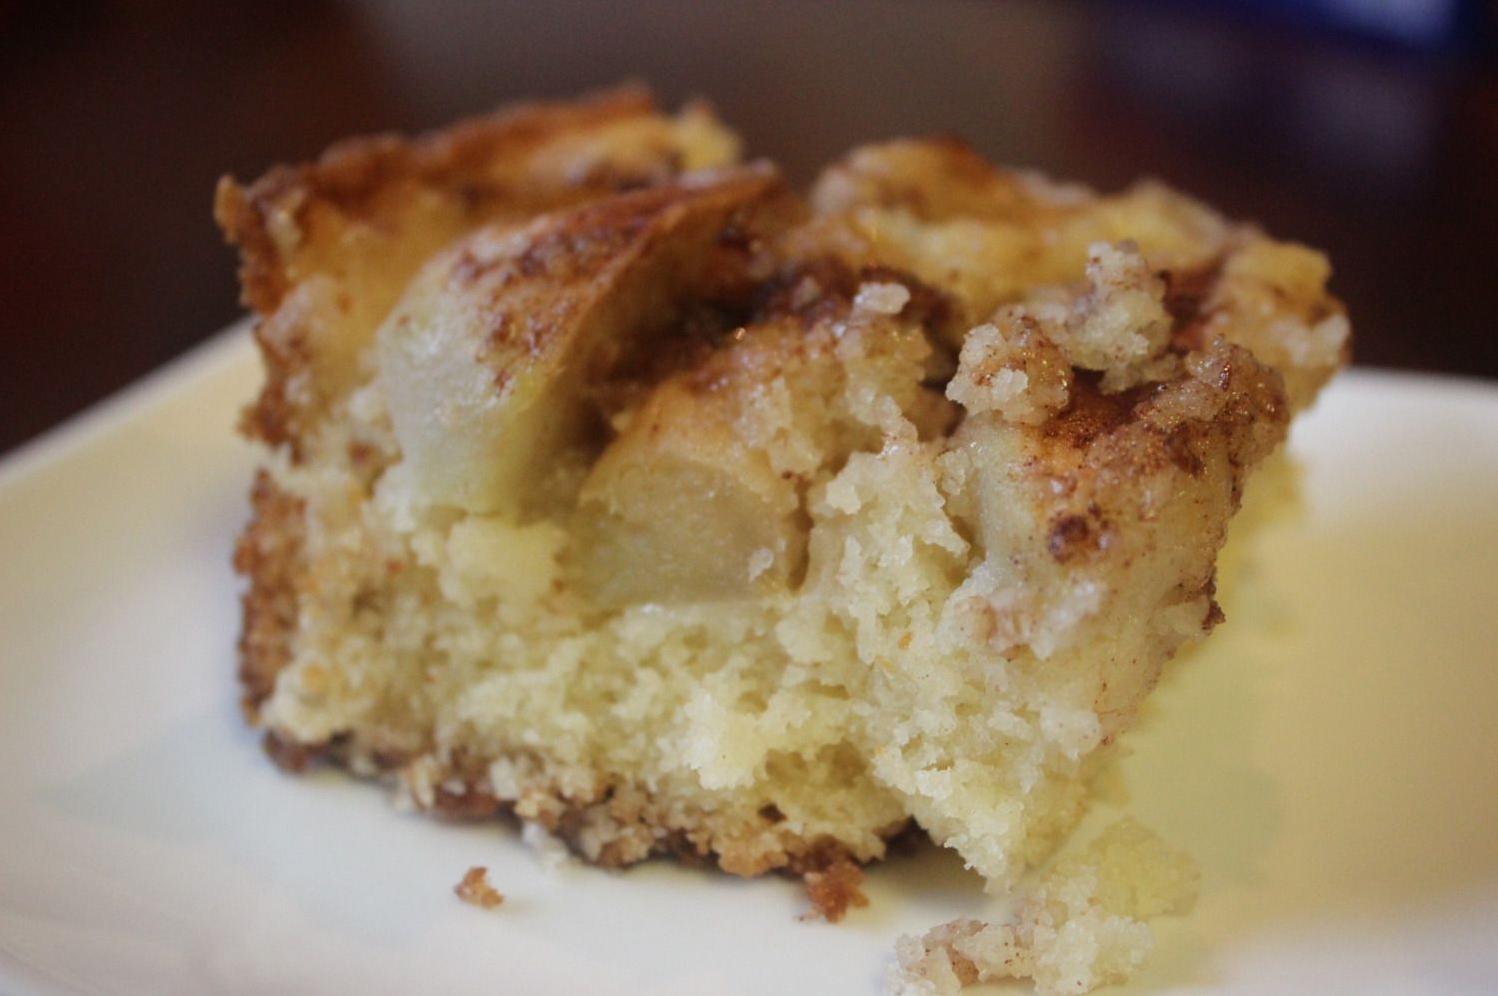  Make this cake your go-to fall dessert!